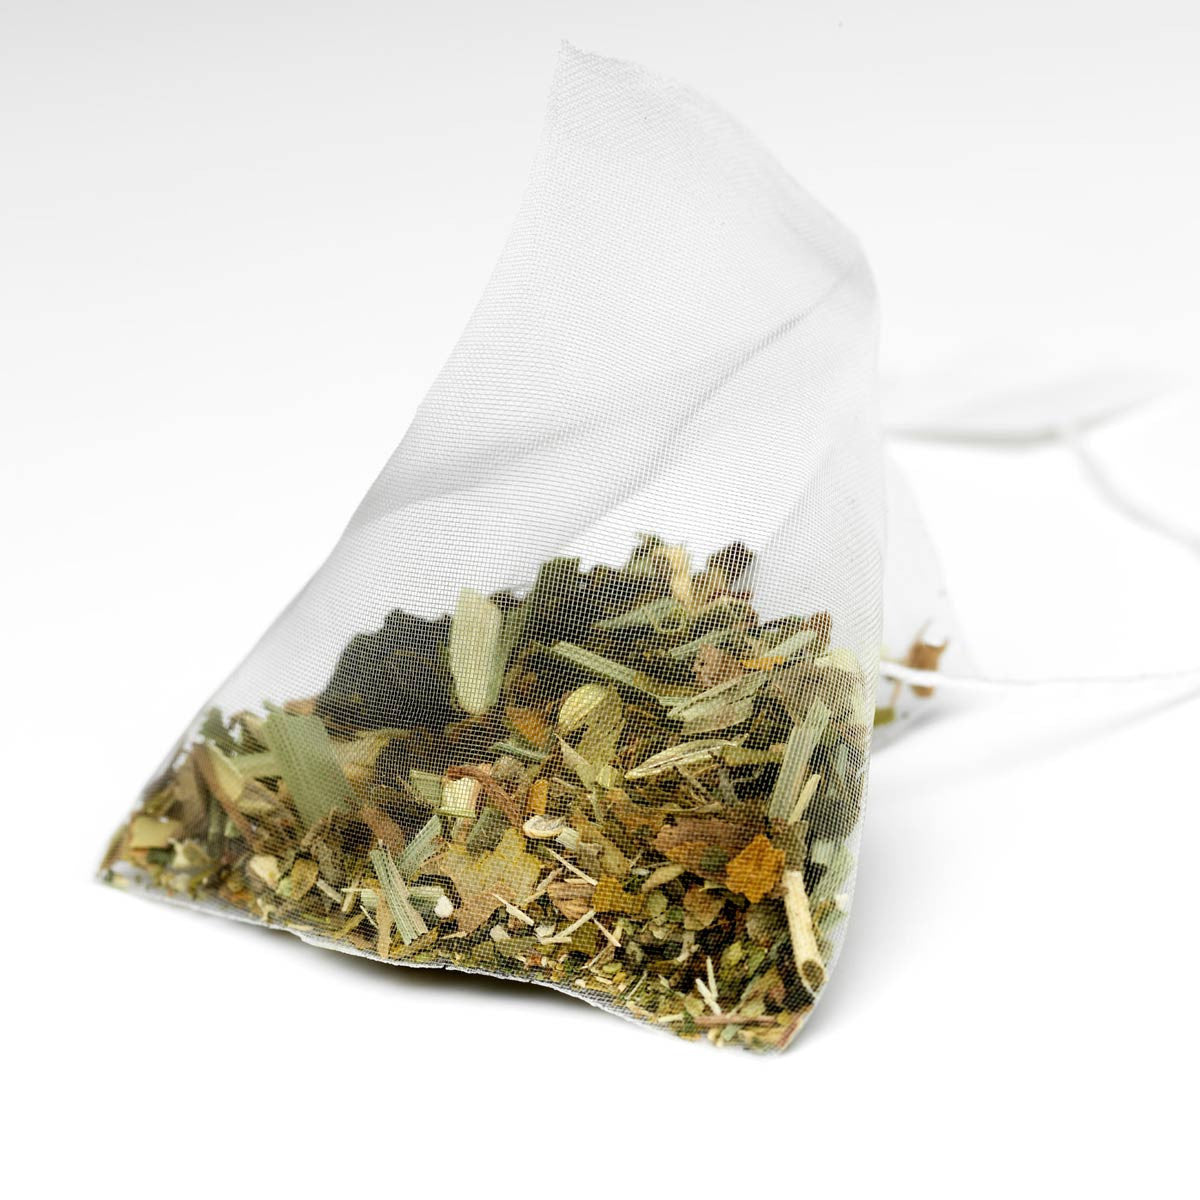 senna-free herbal tea